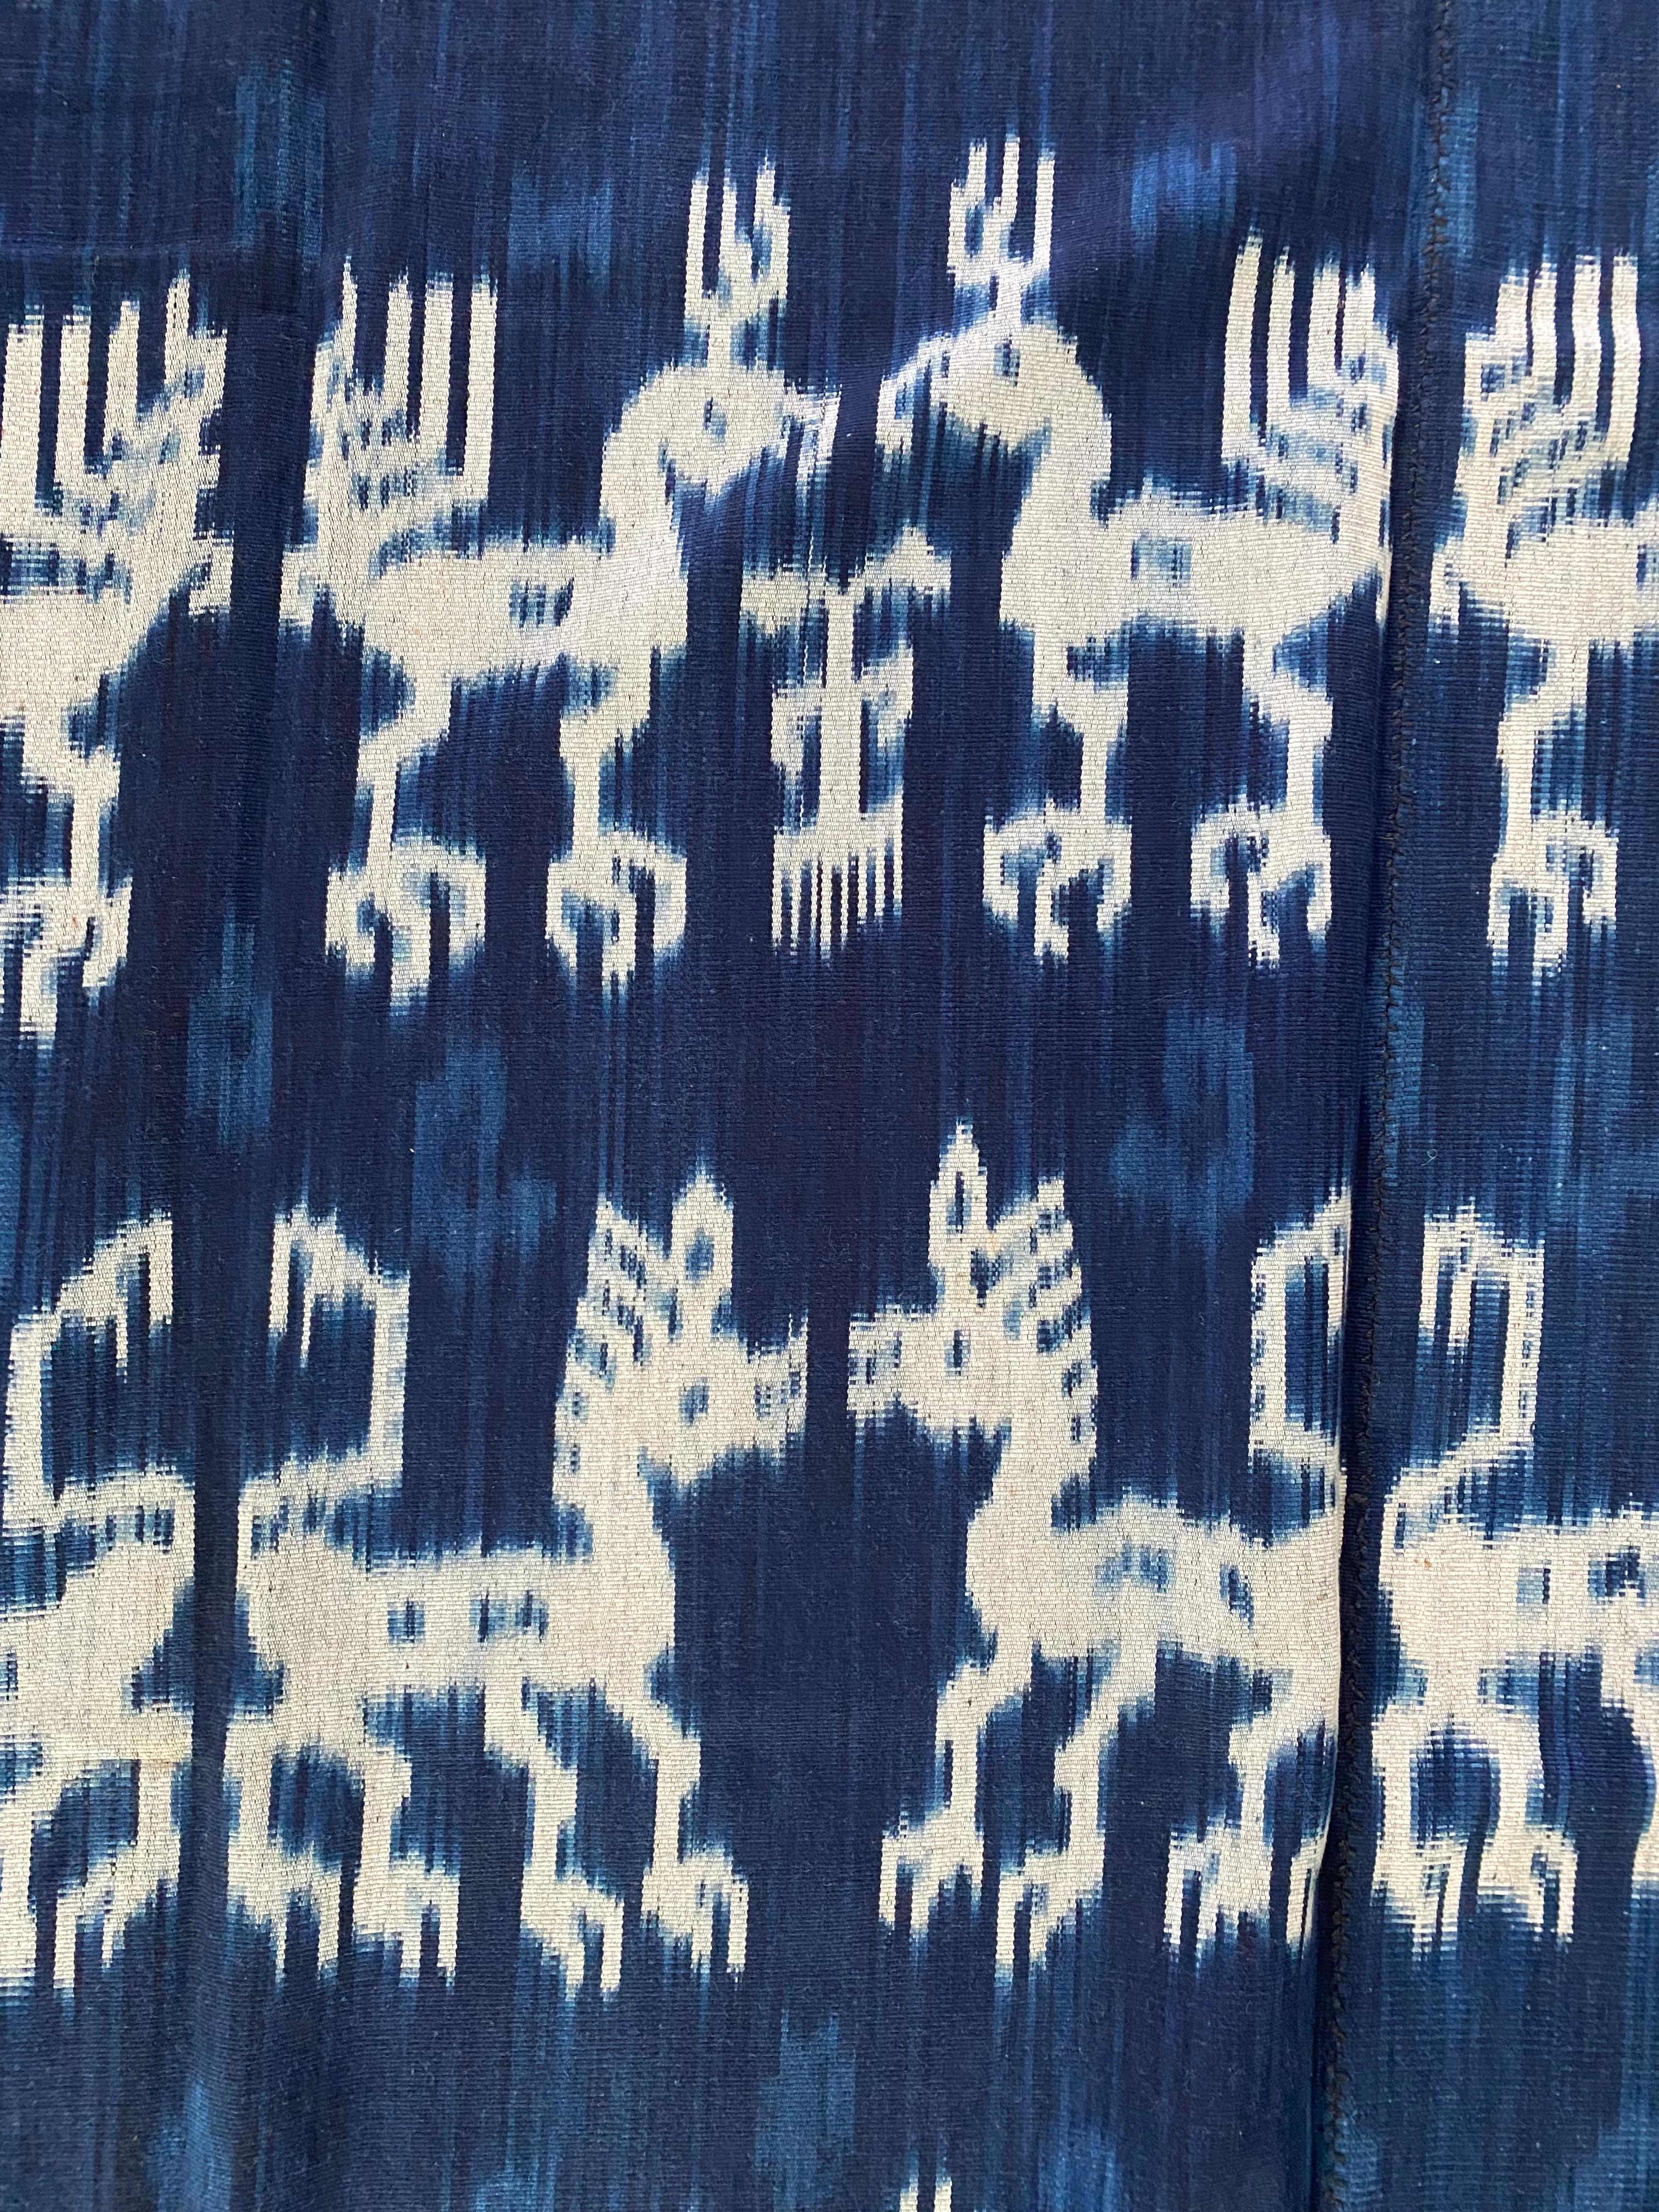 Ikat Textile from Sumba Island, Indonesia 1